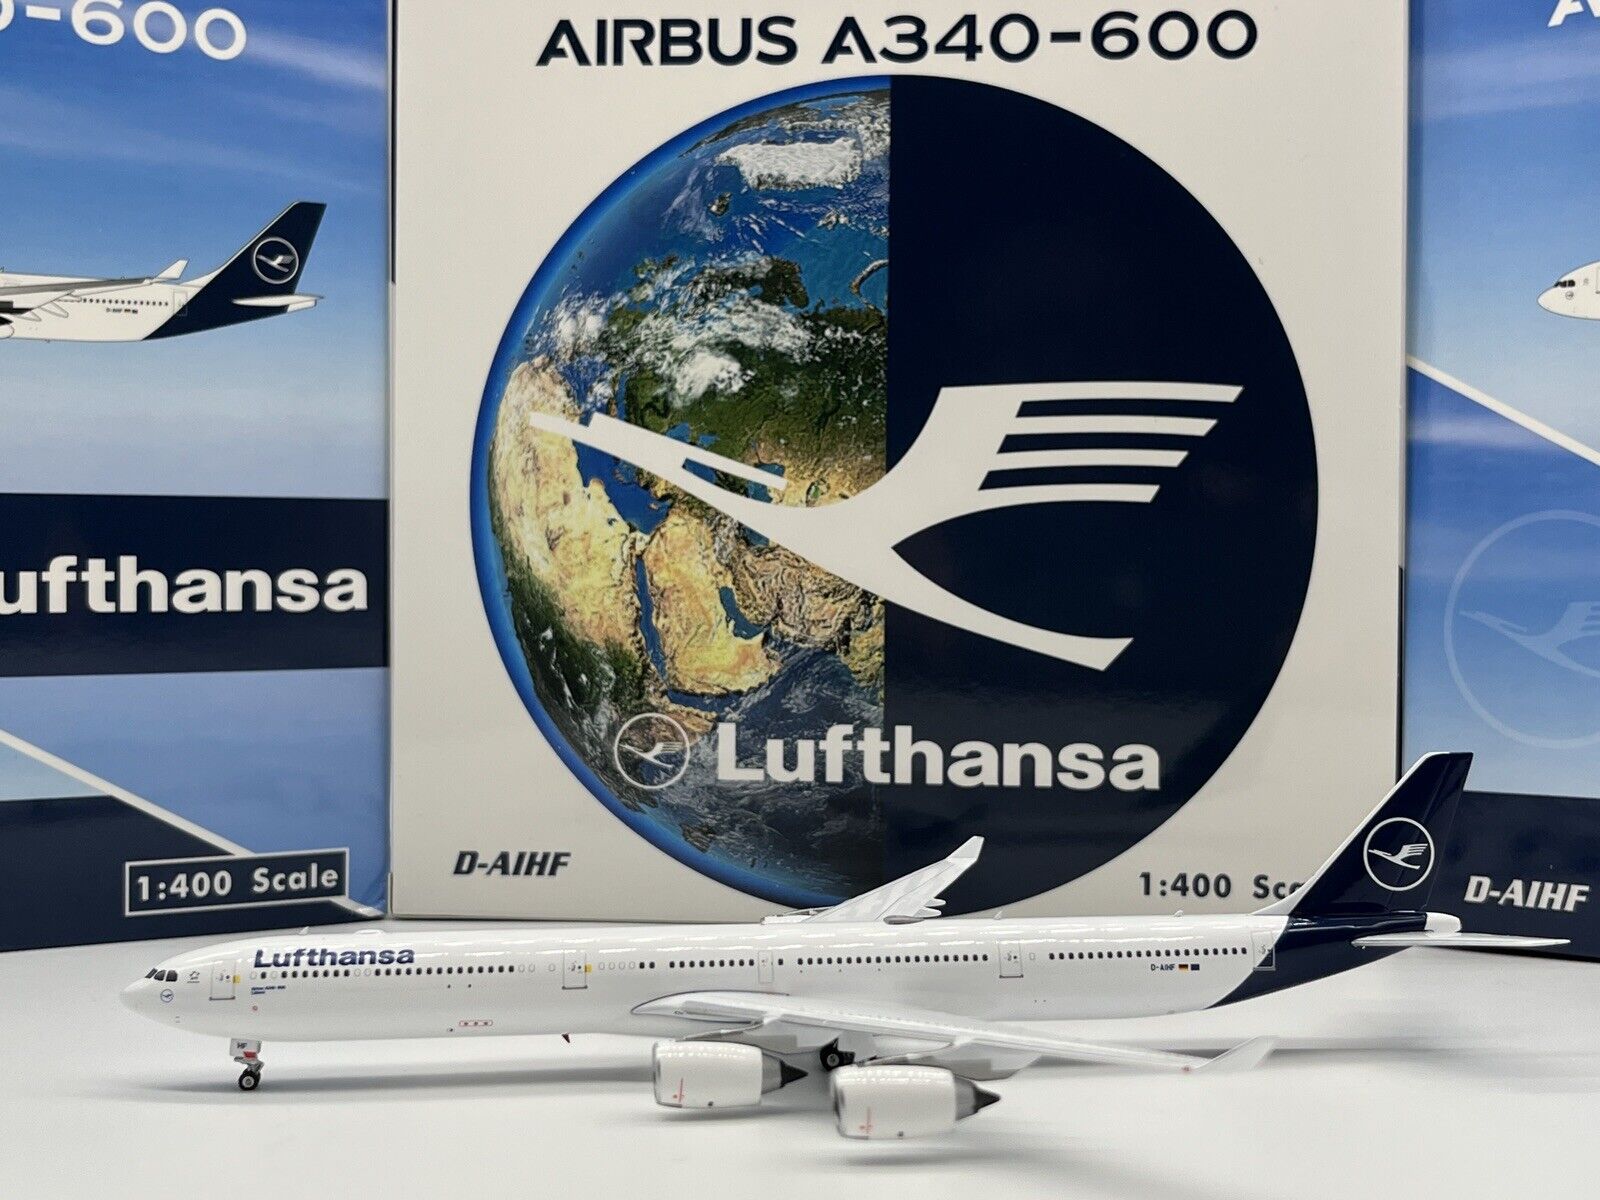 Lufthansa Airbus 340-600 Phoenix 04484 Reg: D-aihf 1:400 Scale Diecast Models